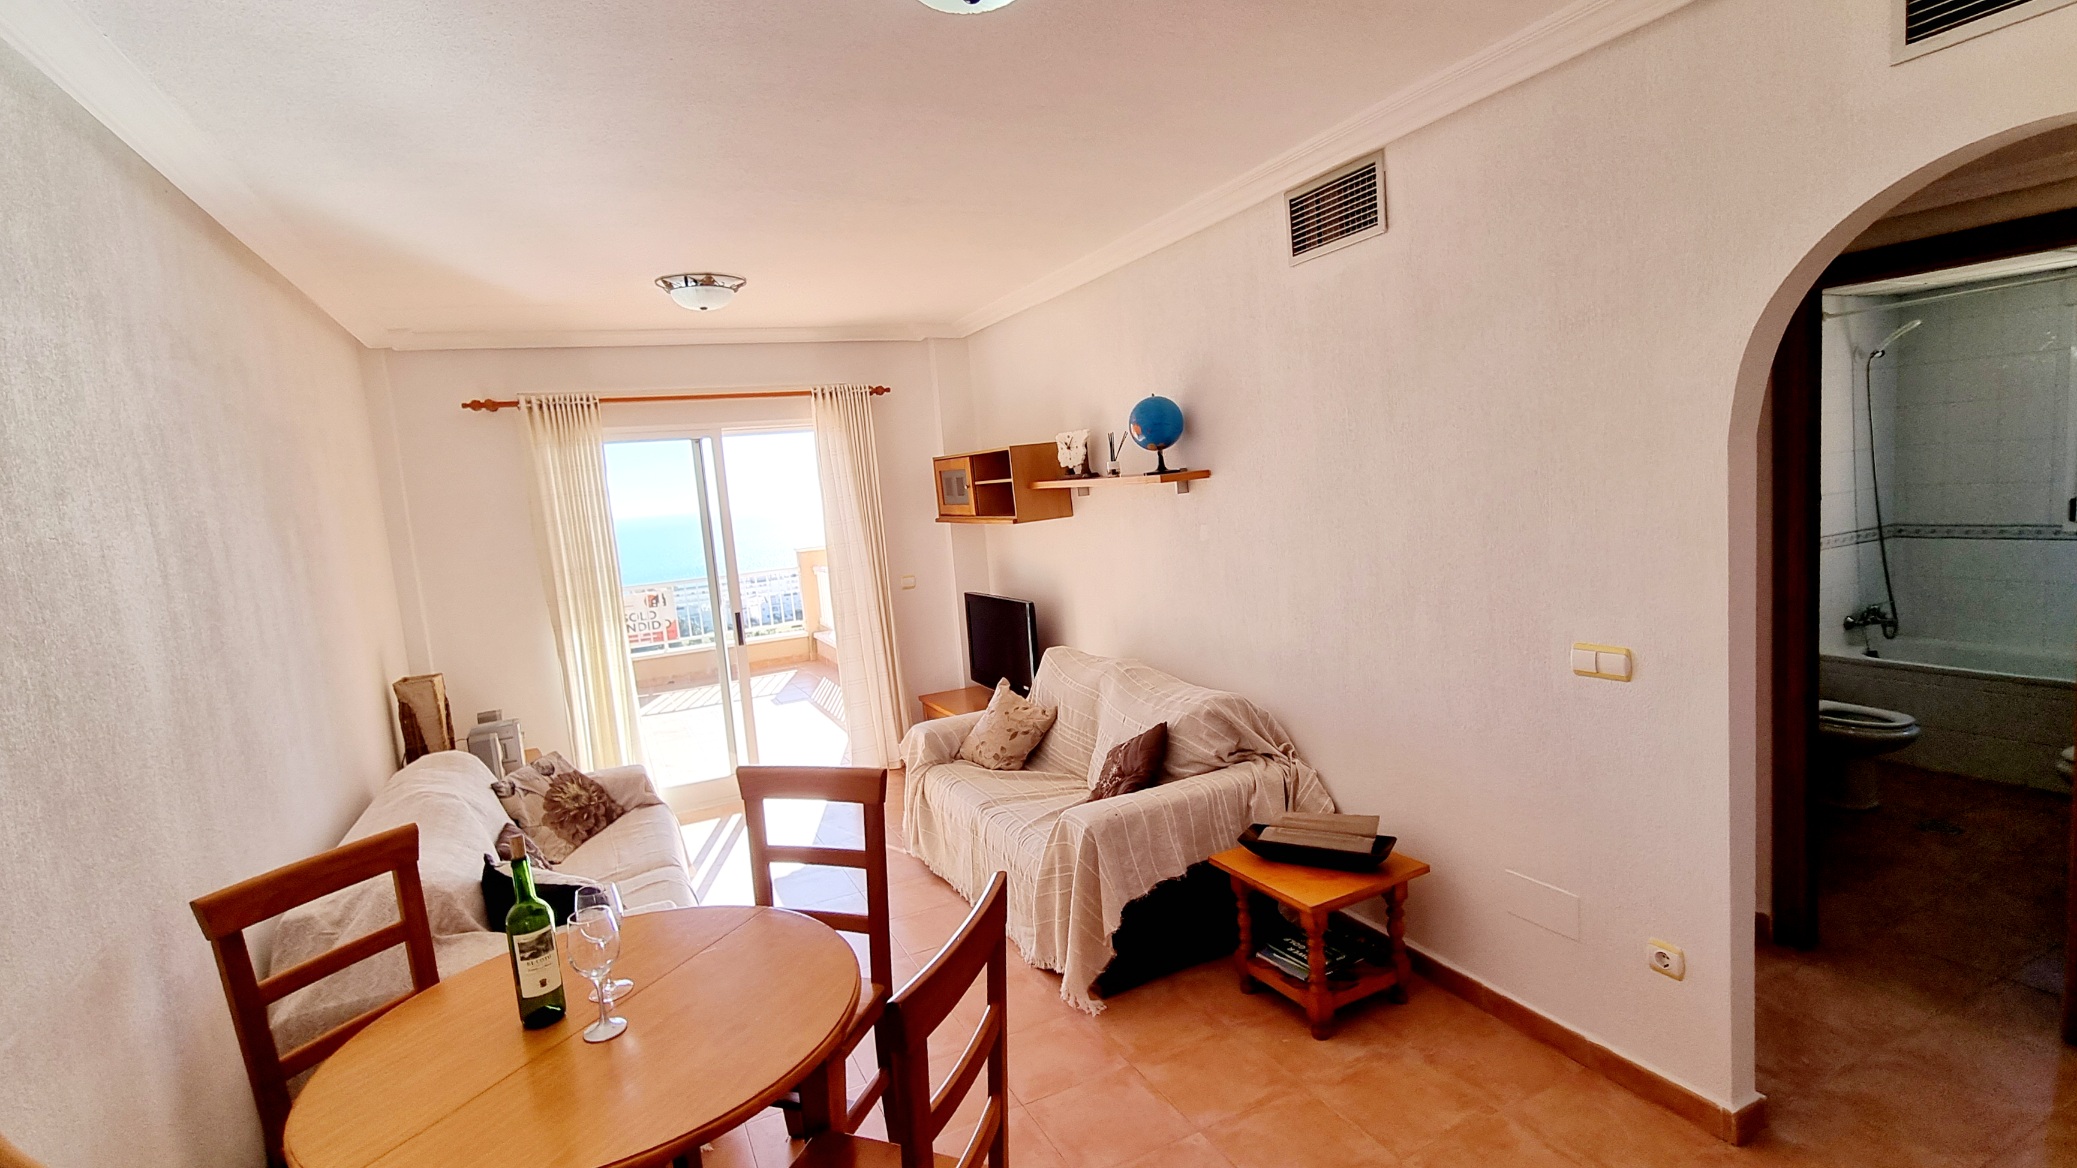 3 Bed 1 Bath Penthouse Apartment For Sale With Amazing Sea Views – Mojacar Almeria